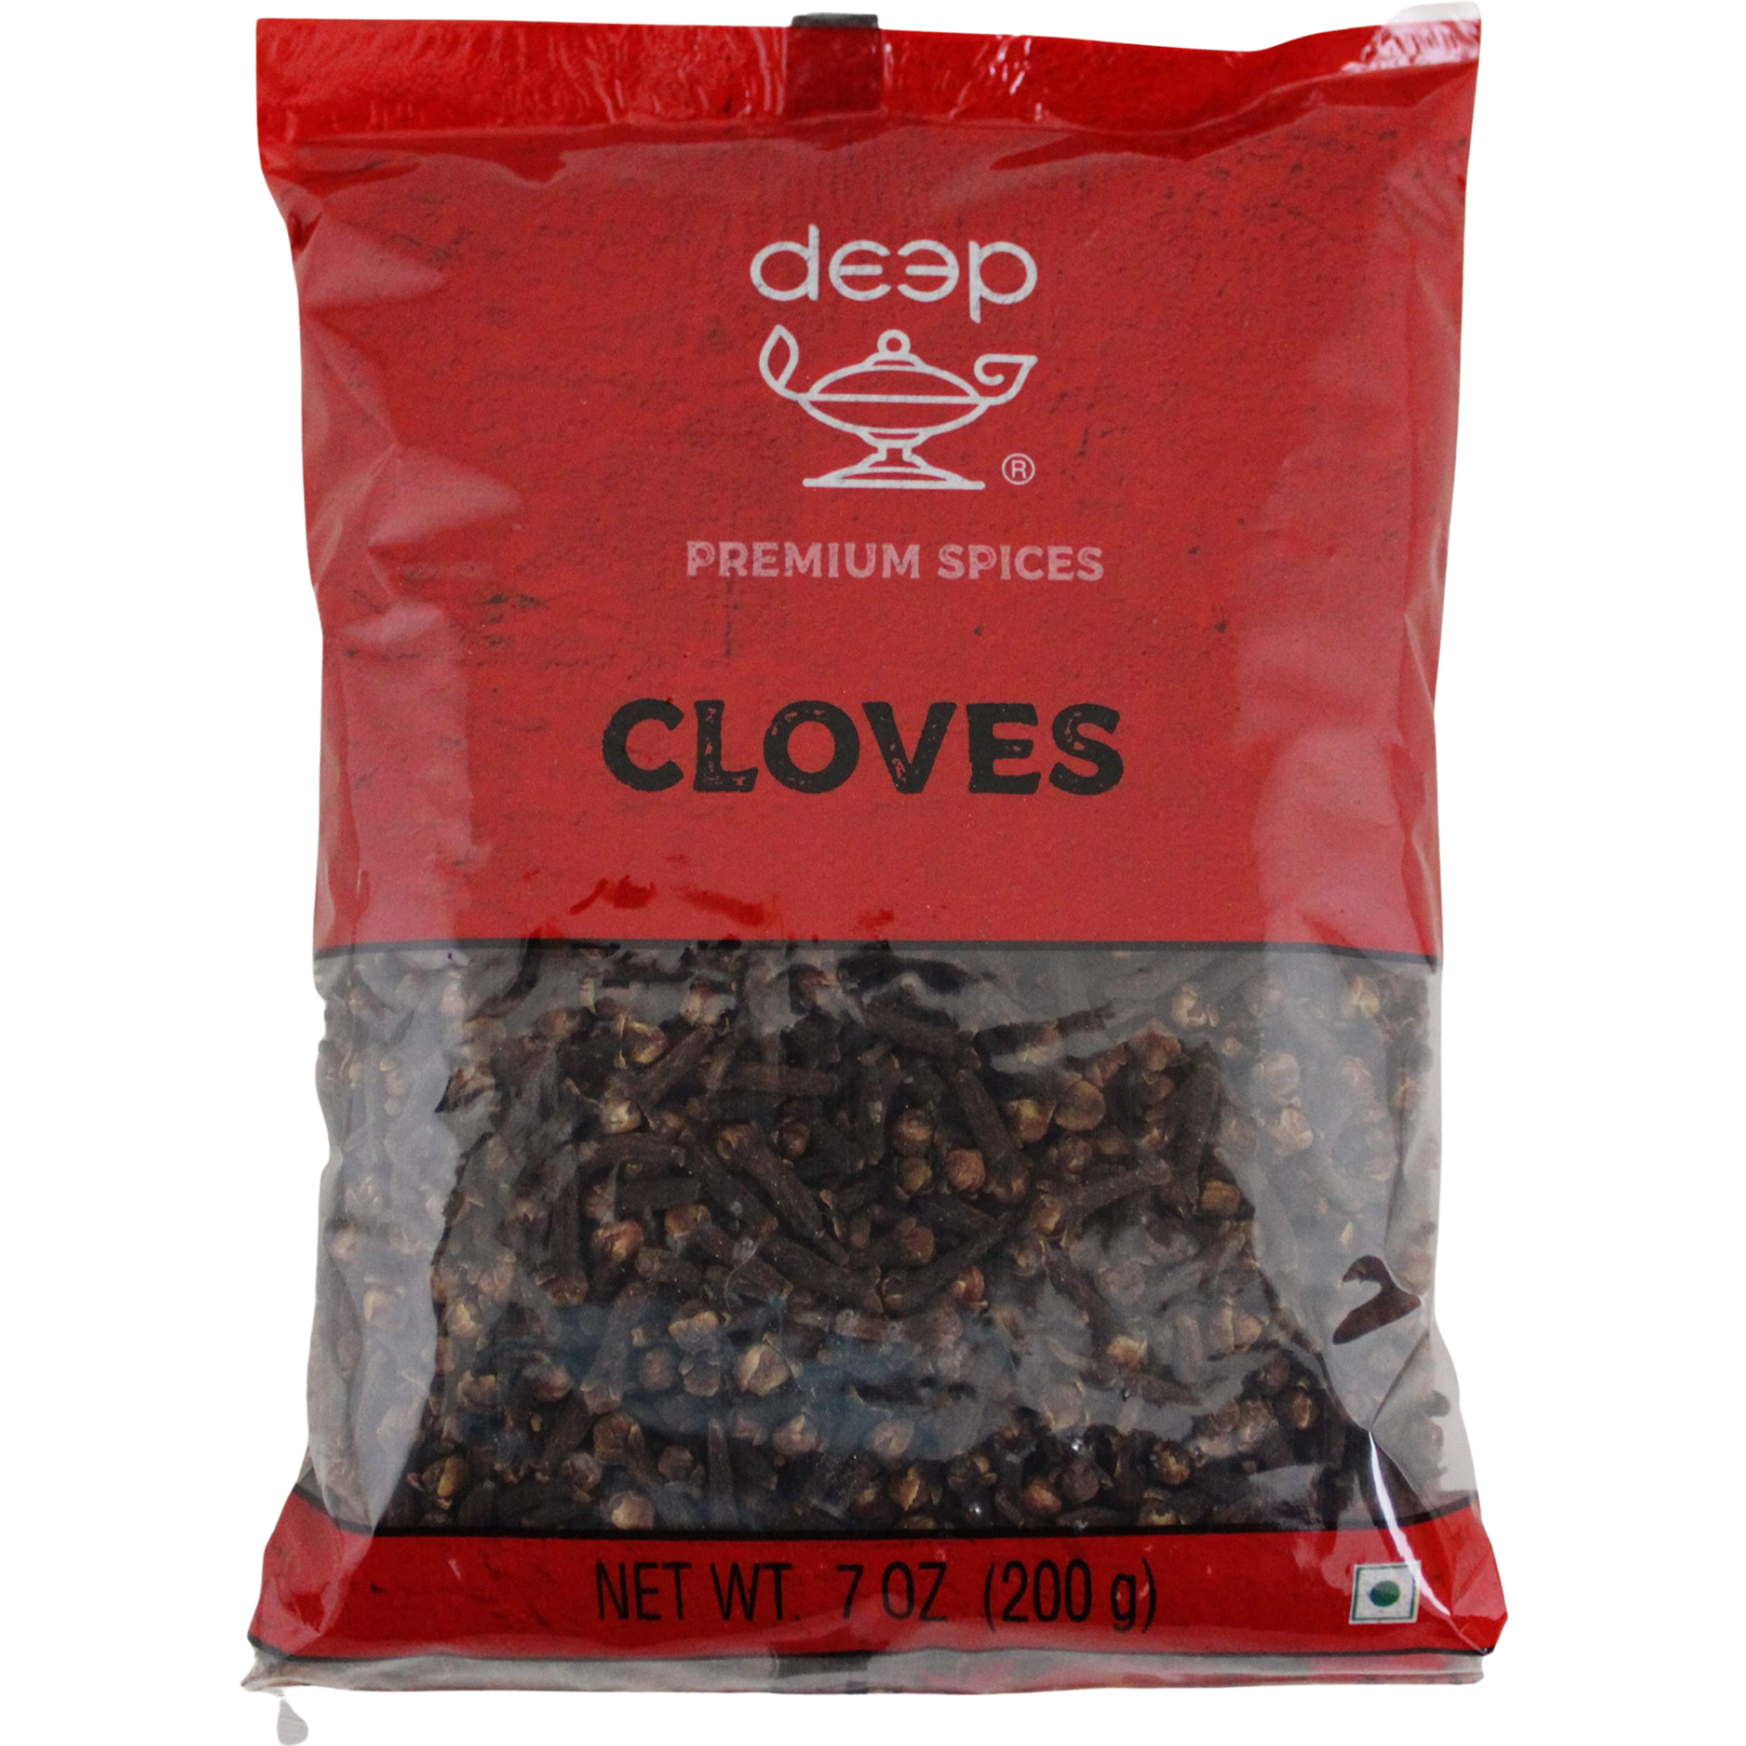 Deep Premium Spices Cloves - 100 Gm (3.5 Oz)